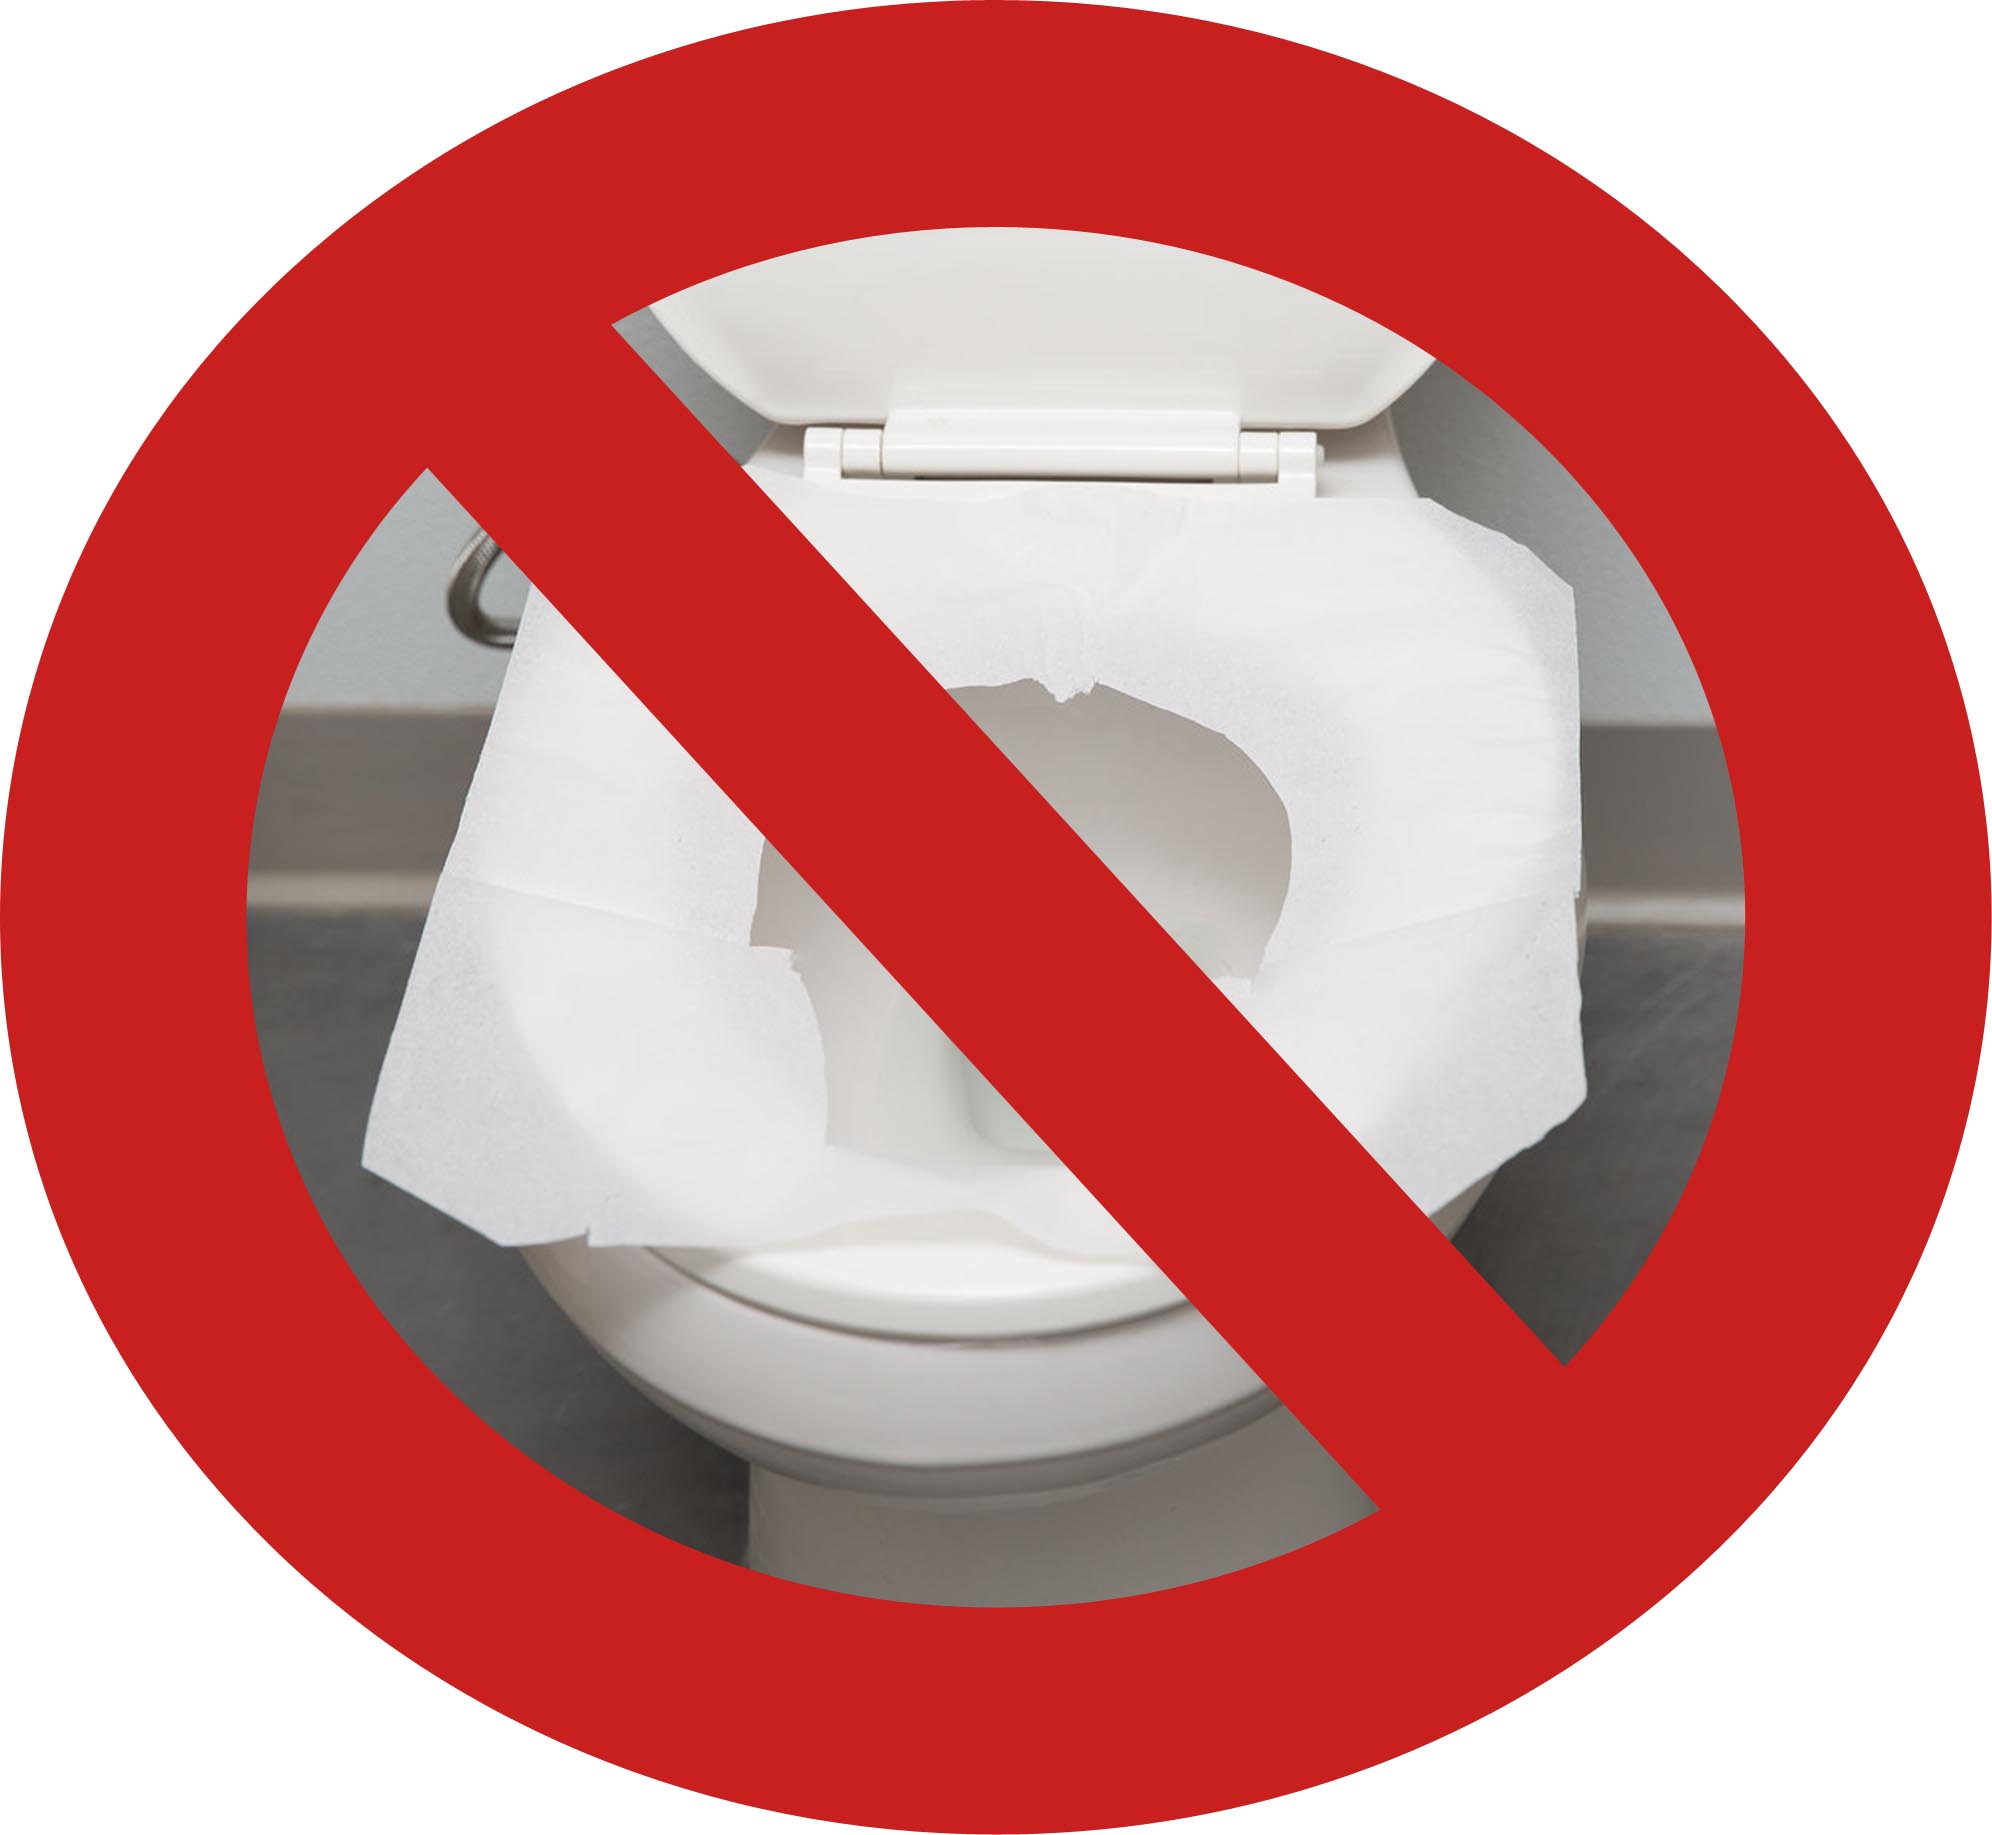 tissue paper on toilet public restrooms